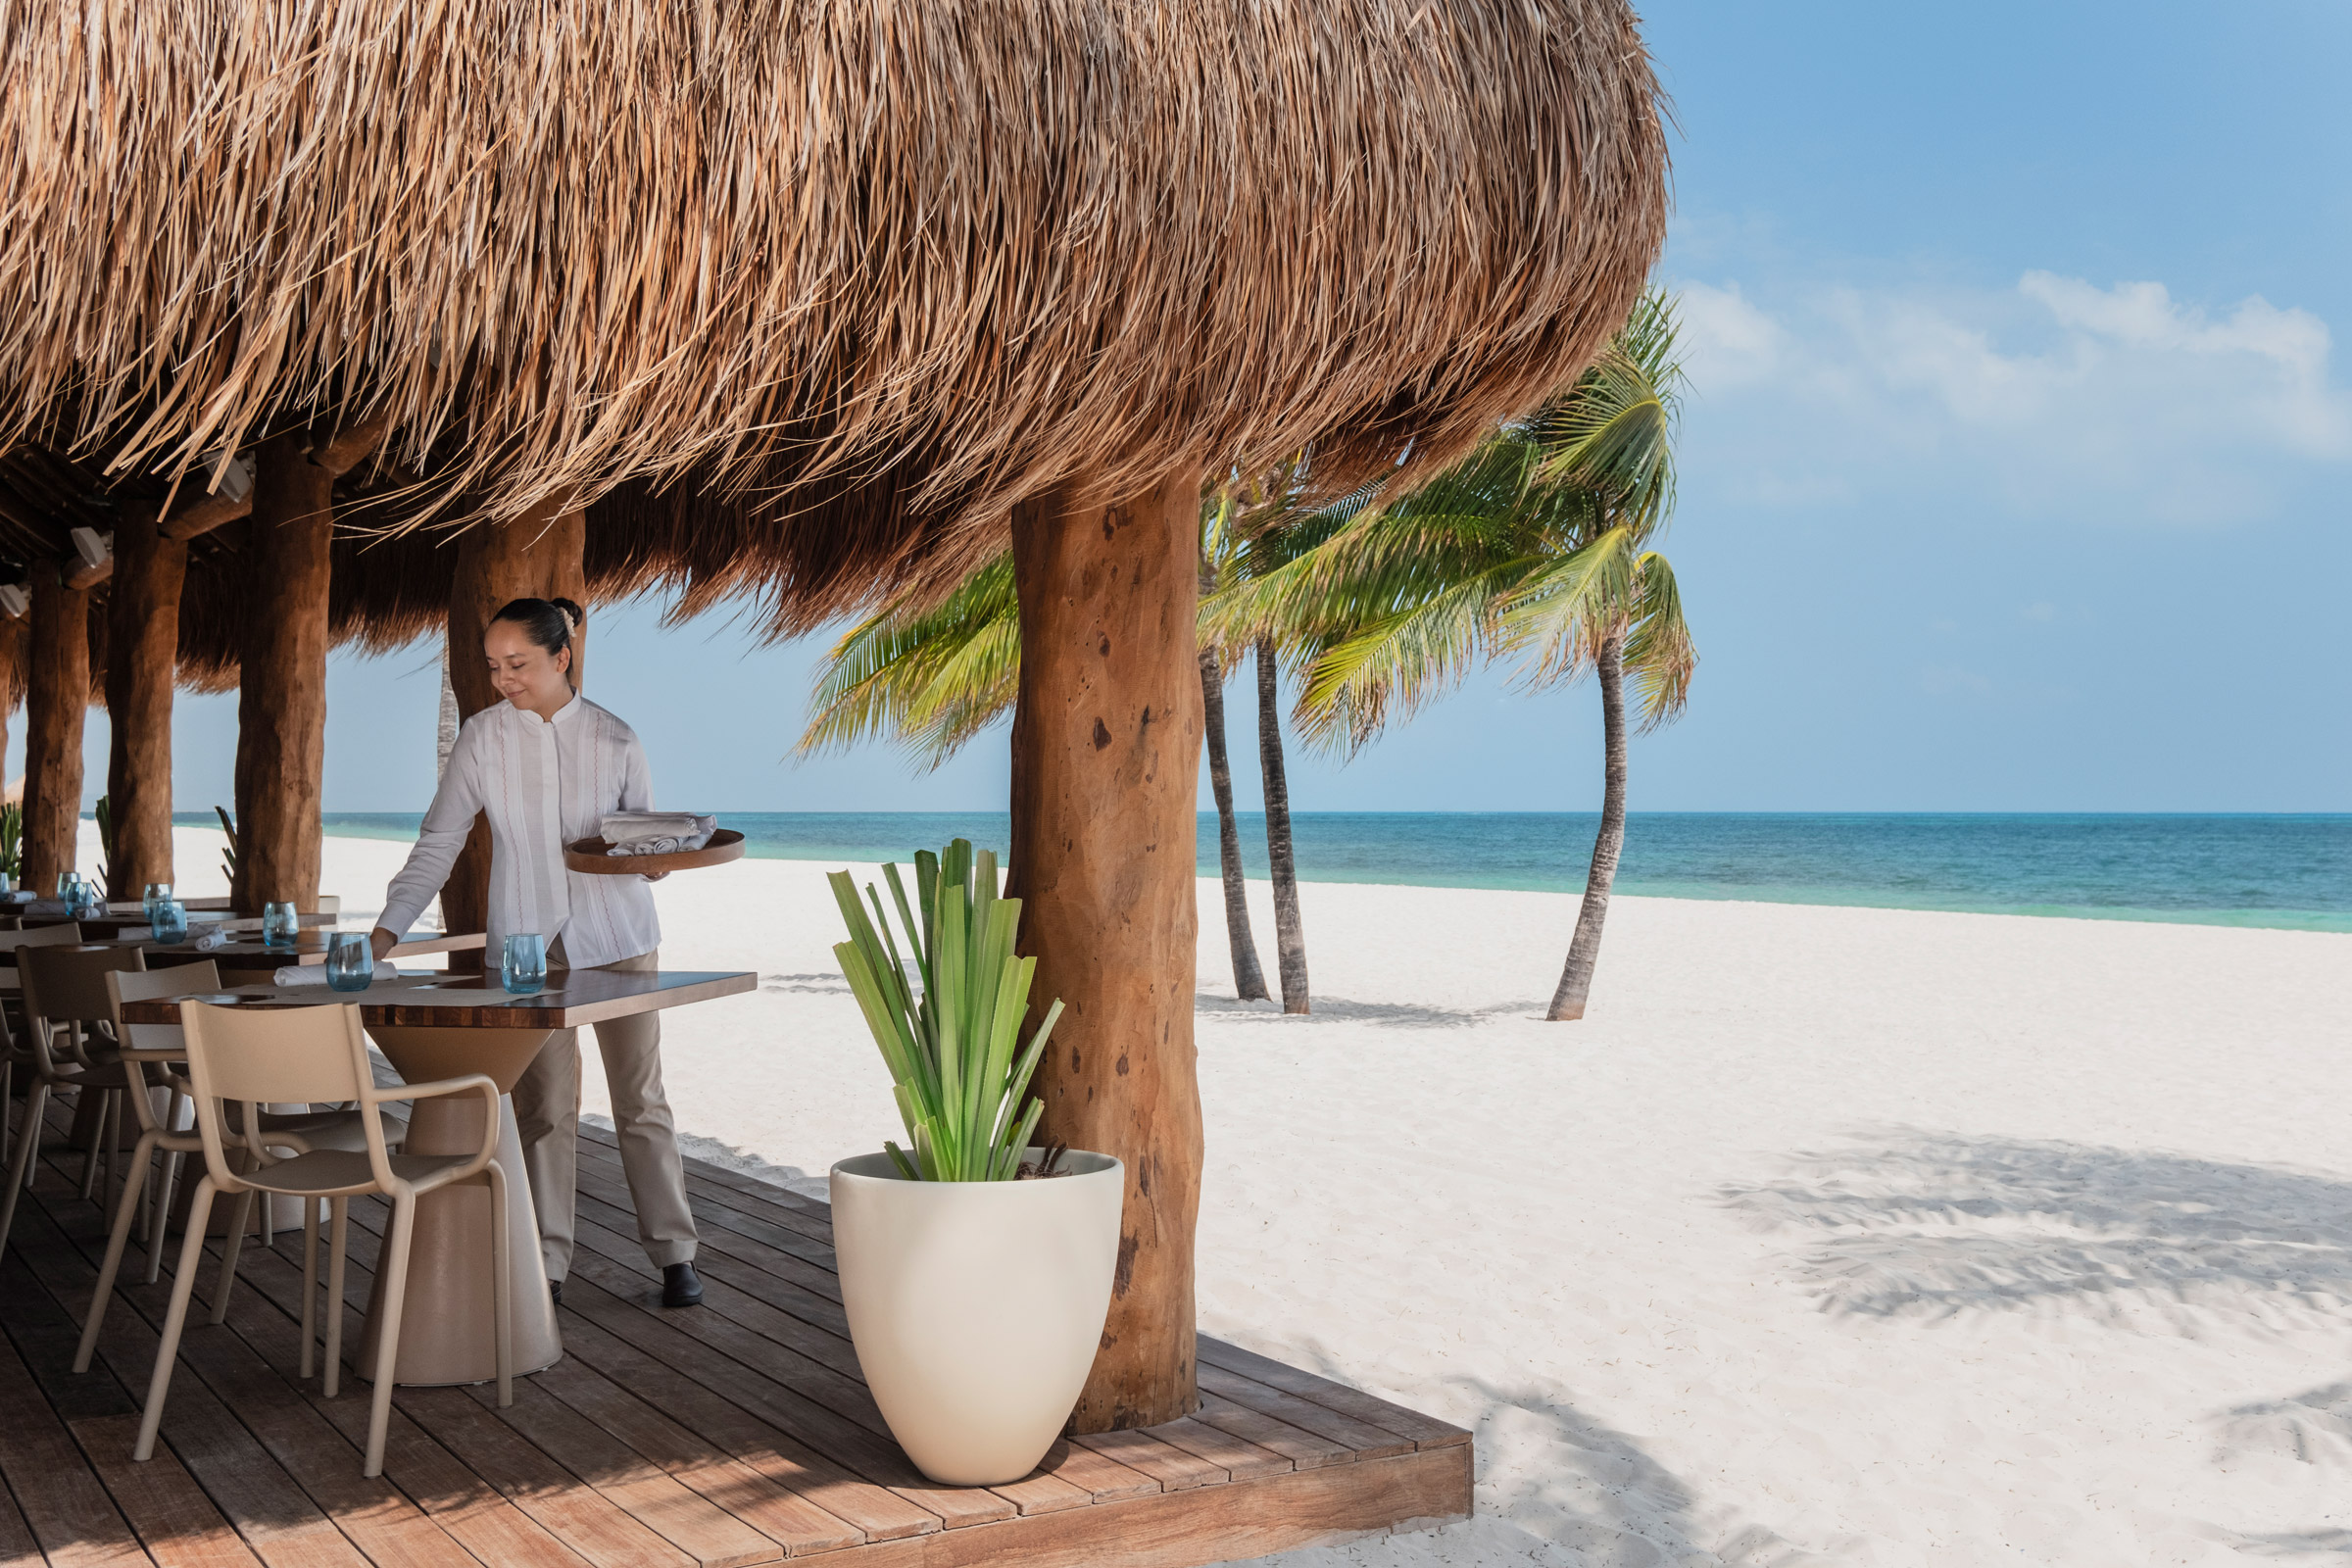 Beachfront dining in Cancun